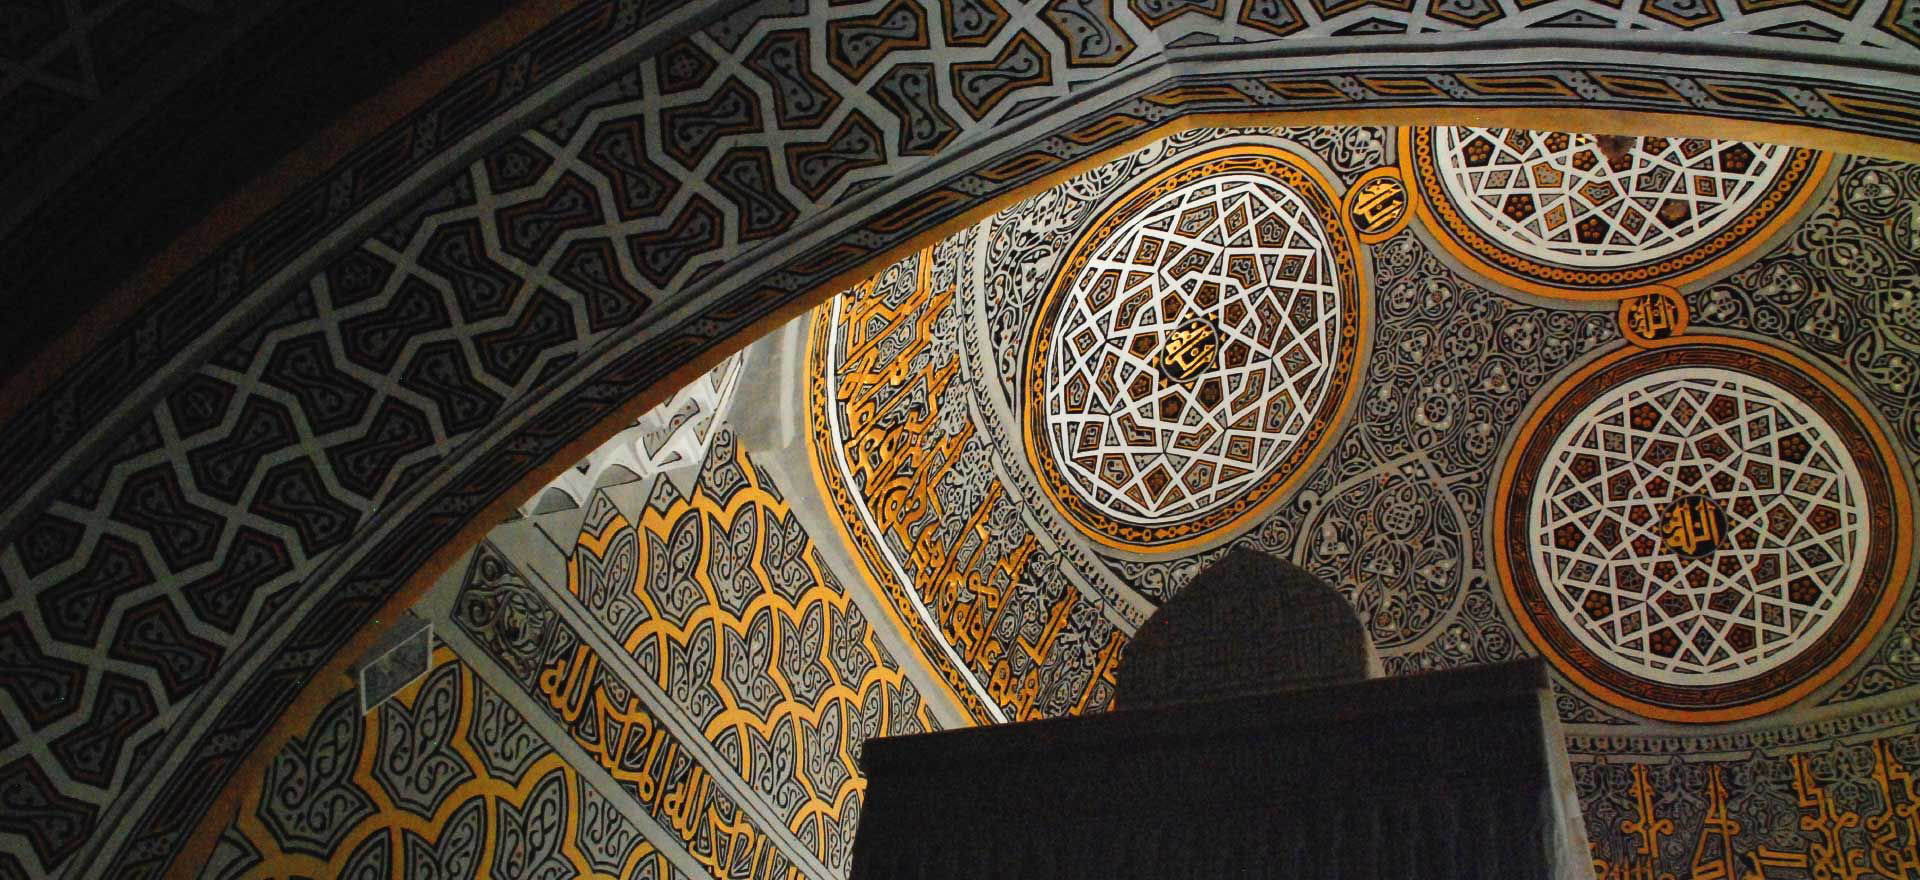 Interior of mausoleum in Uzbekistan - Central Asia holidays